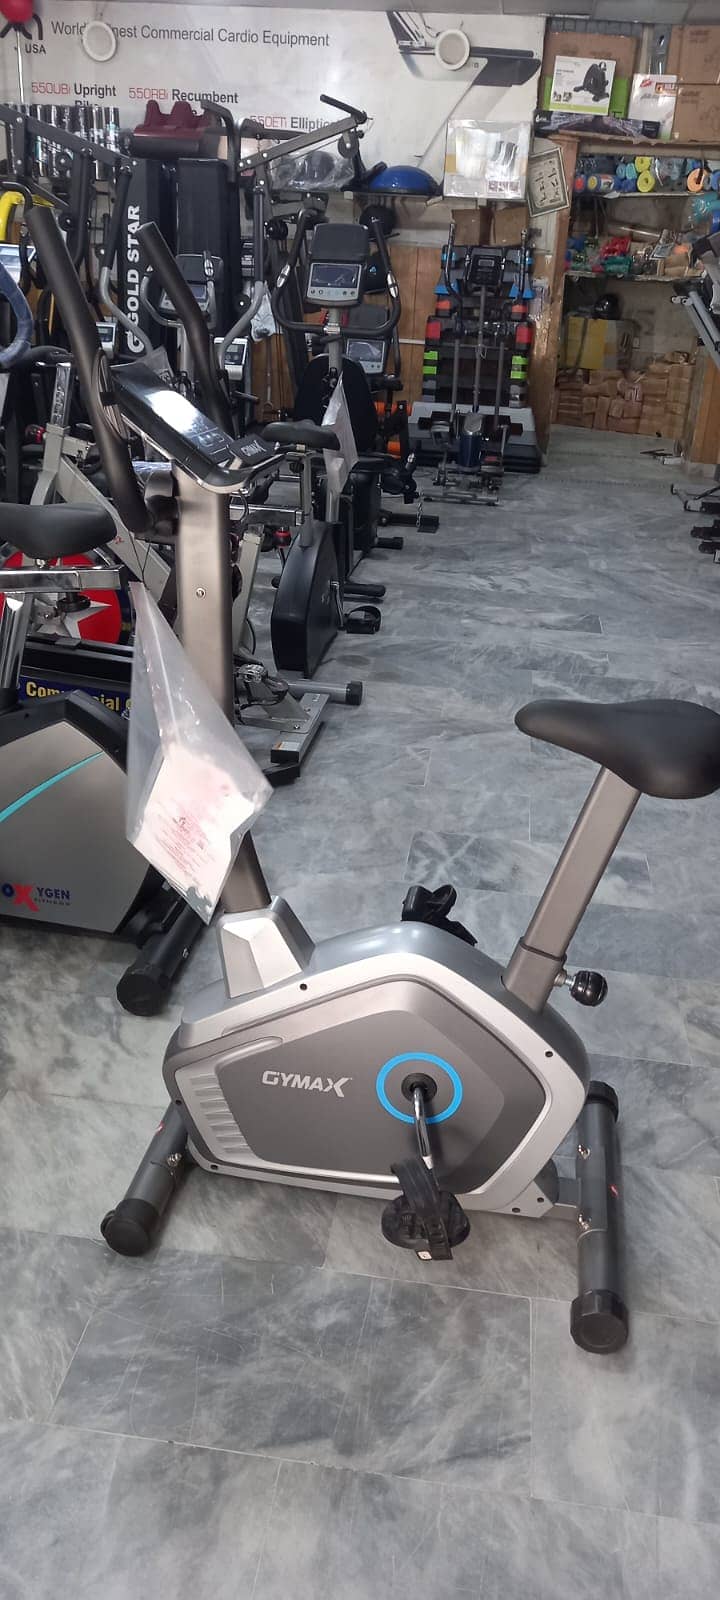 Exercise elliptical |treadmill |upright bike spin bike| cycle|dumbball 8